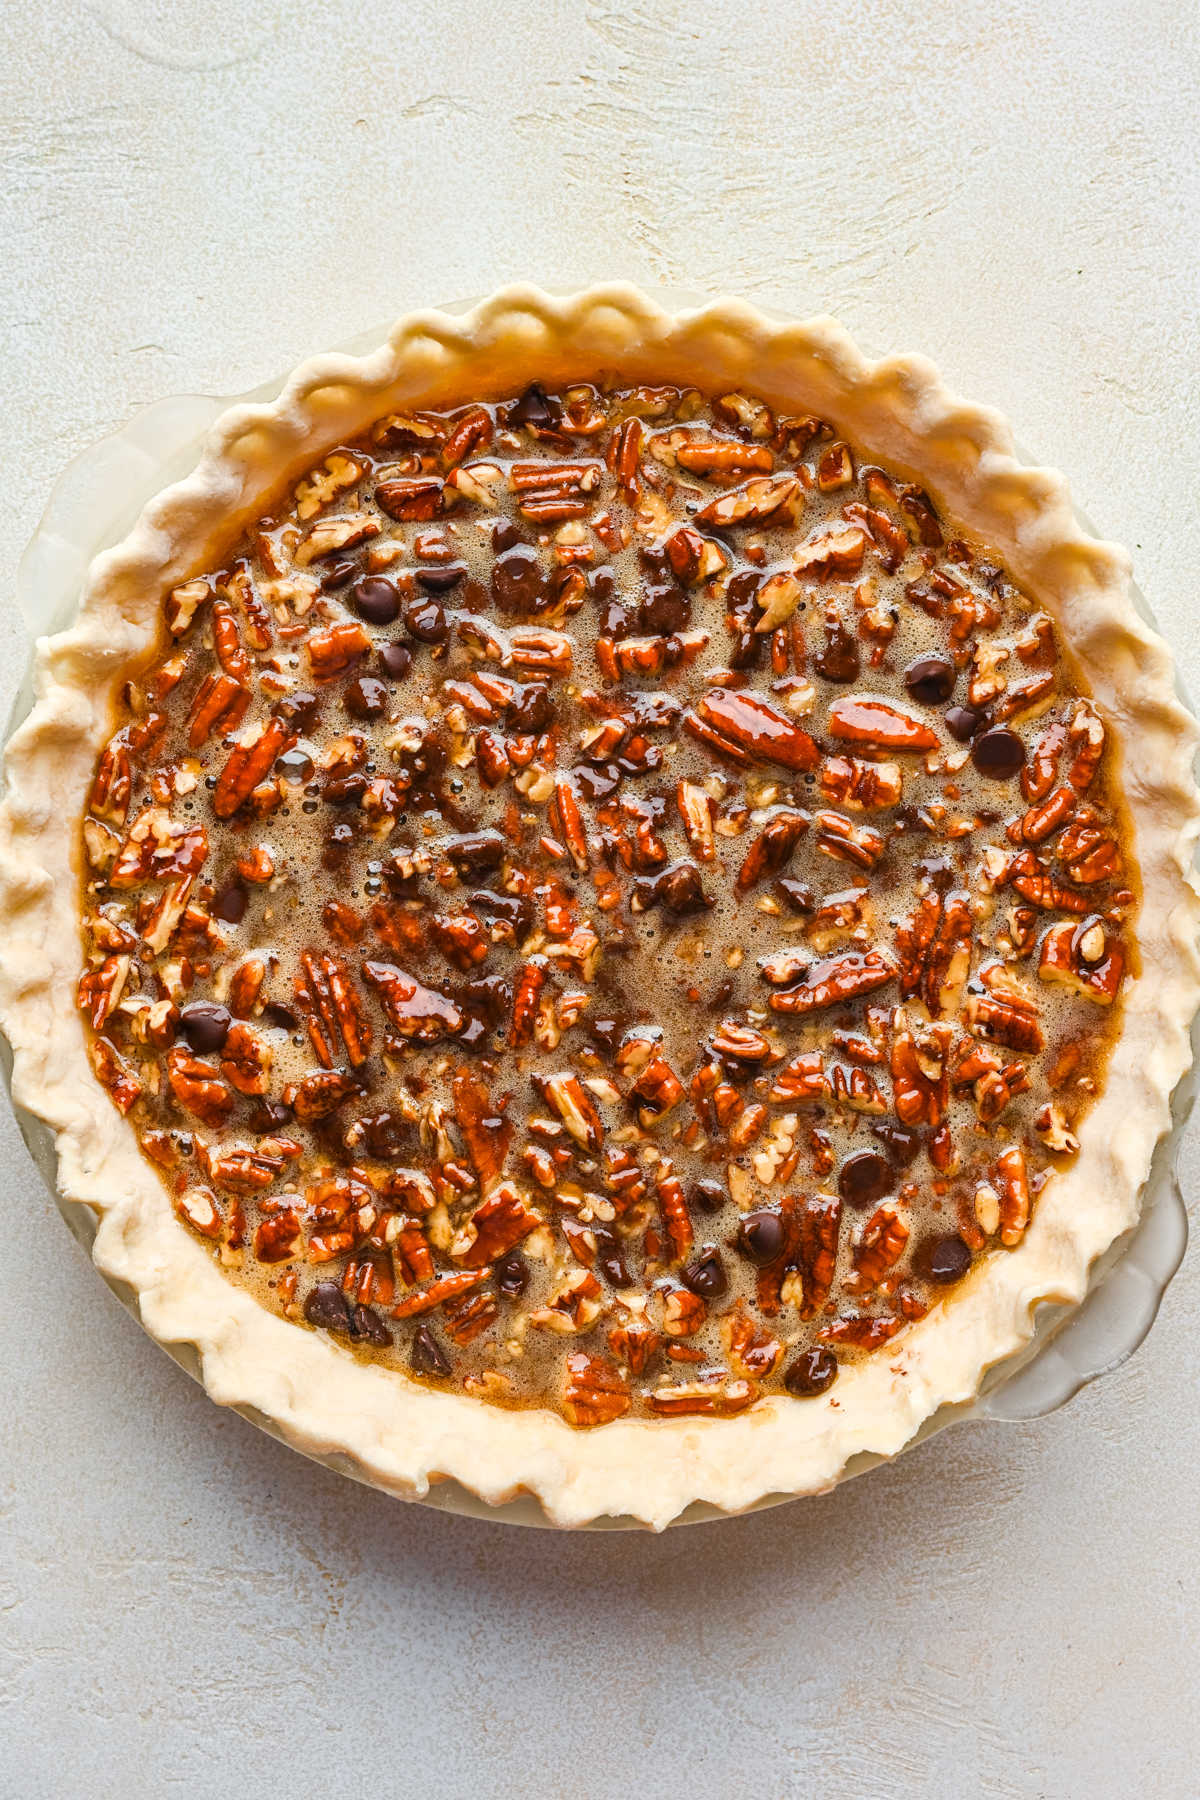 Chocolate pecan pie filling in an unbaked pie crust. 